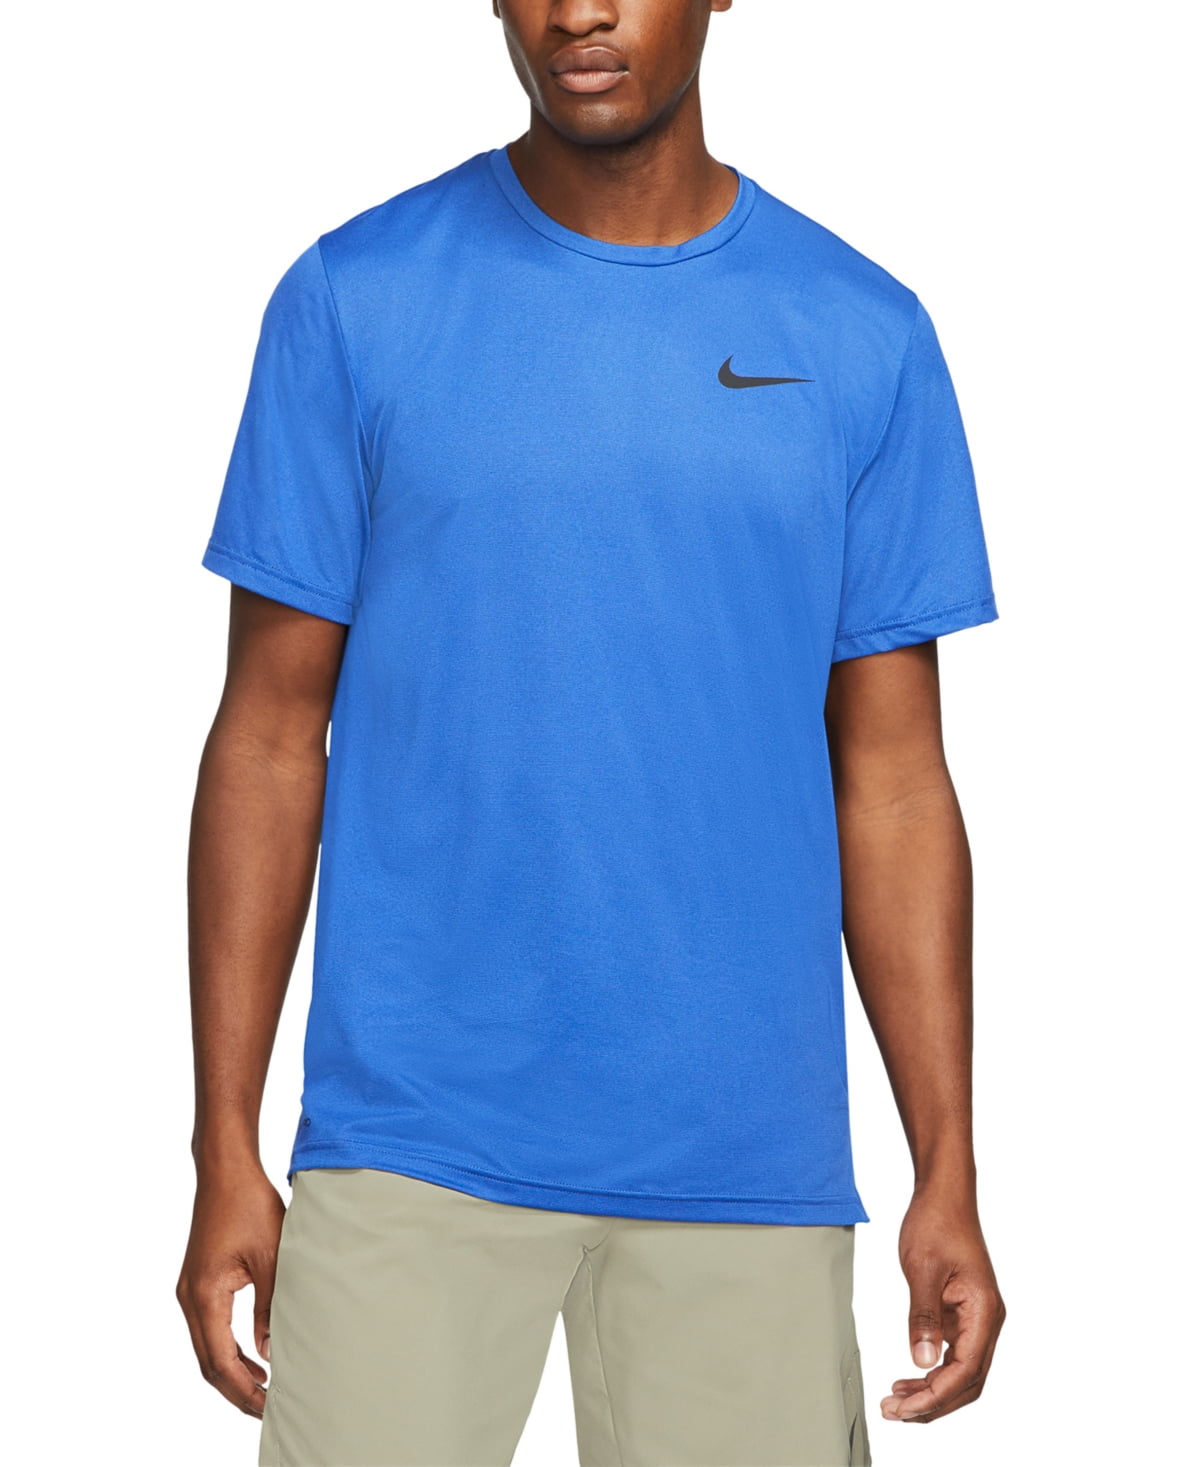 Nike Men's Hyperdry Training T-Shirt Blue Size Medium - Walmart.com